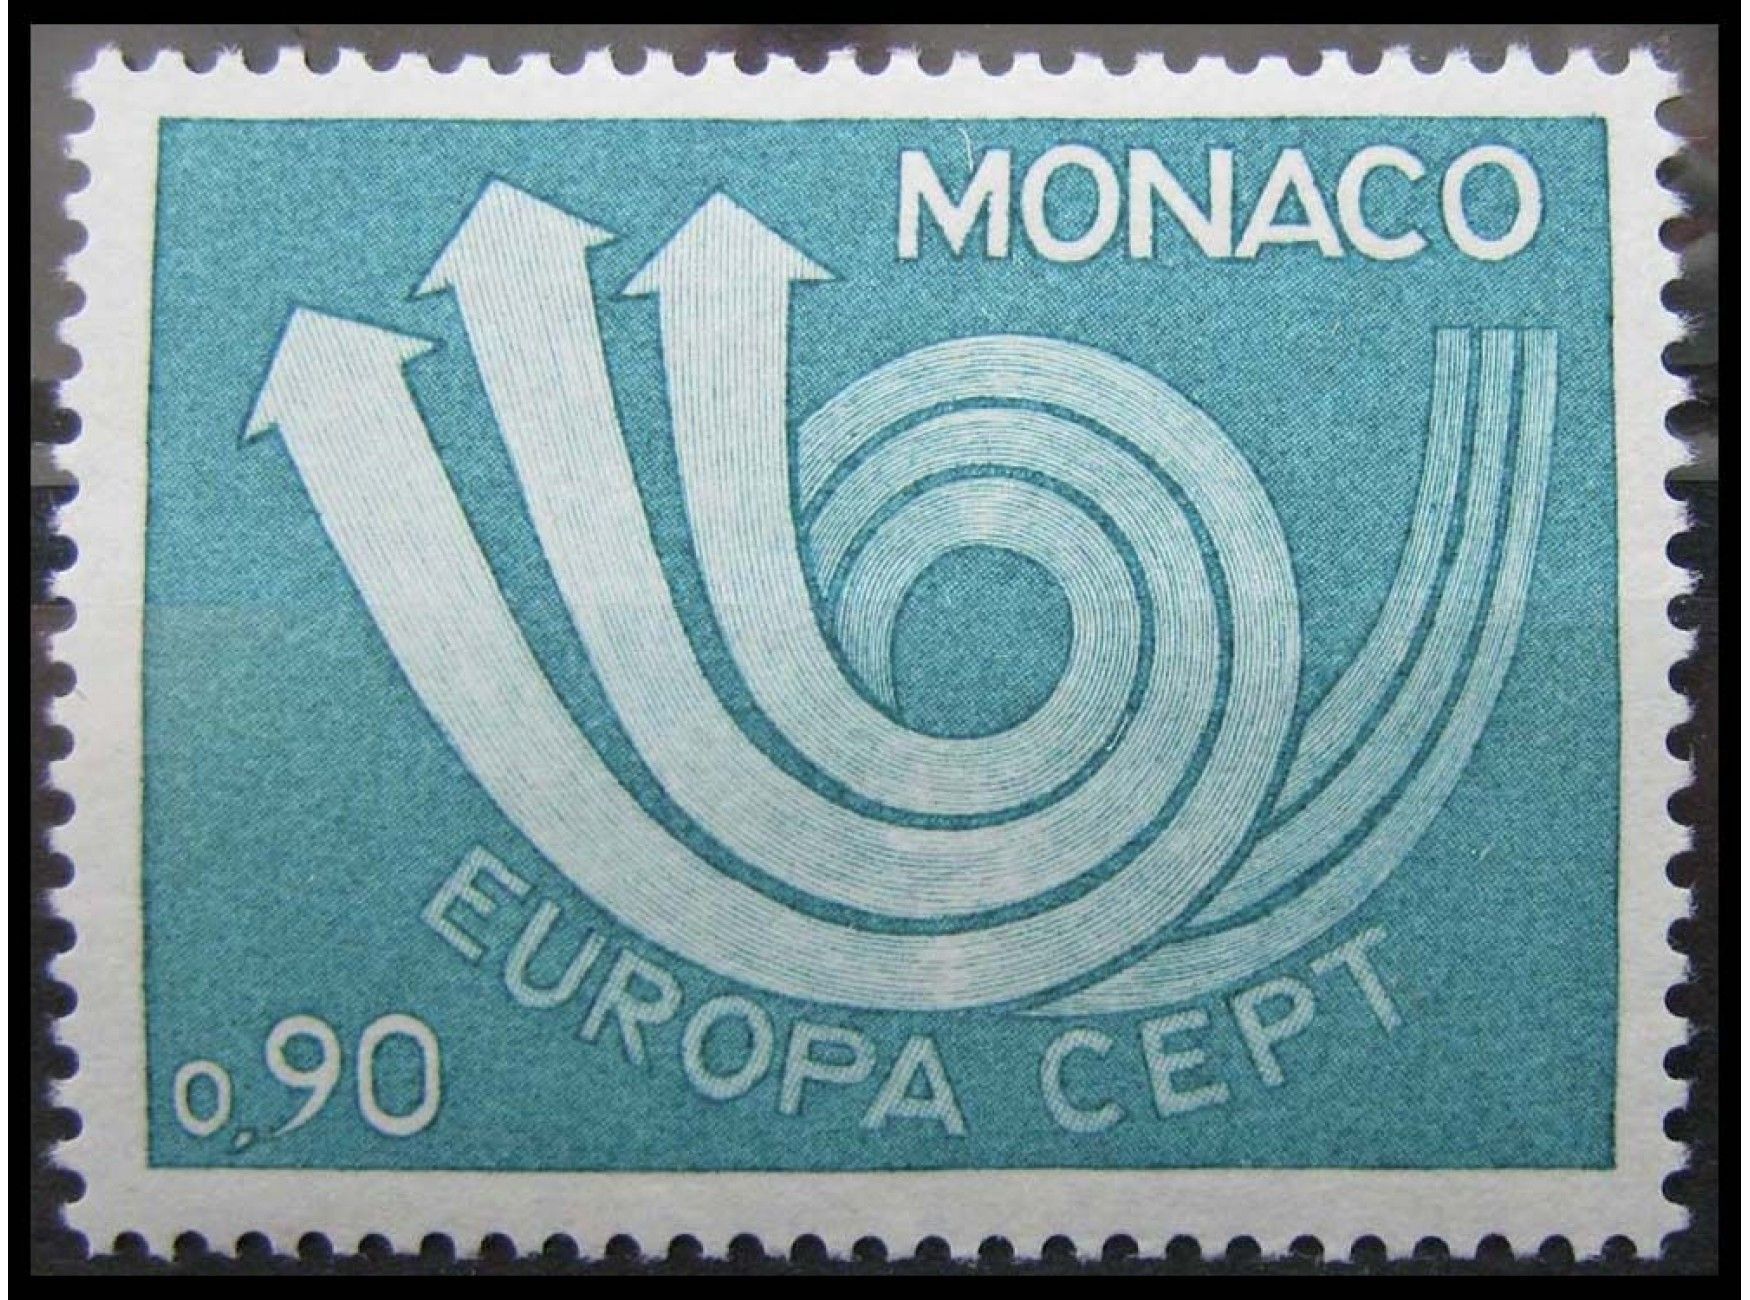 1973 год купить. Монако почтовые услуги. Stamps Europa cept 1973. Europa cept stamps Russia.